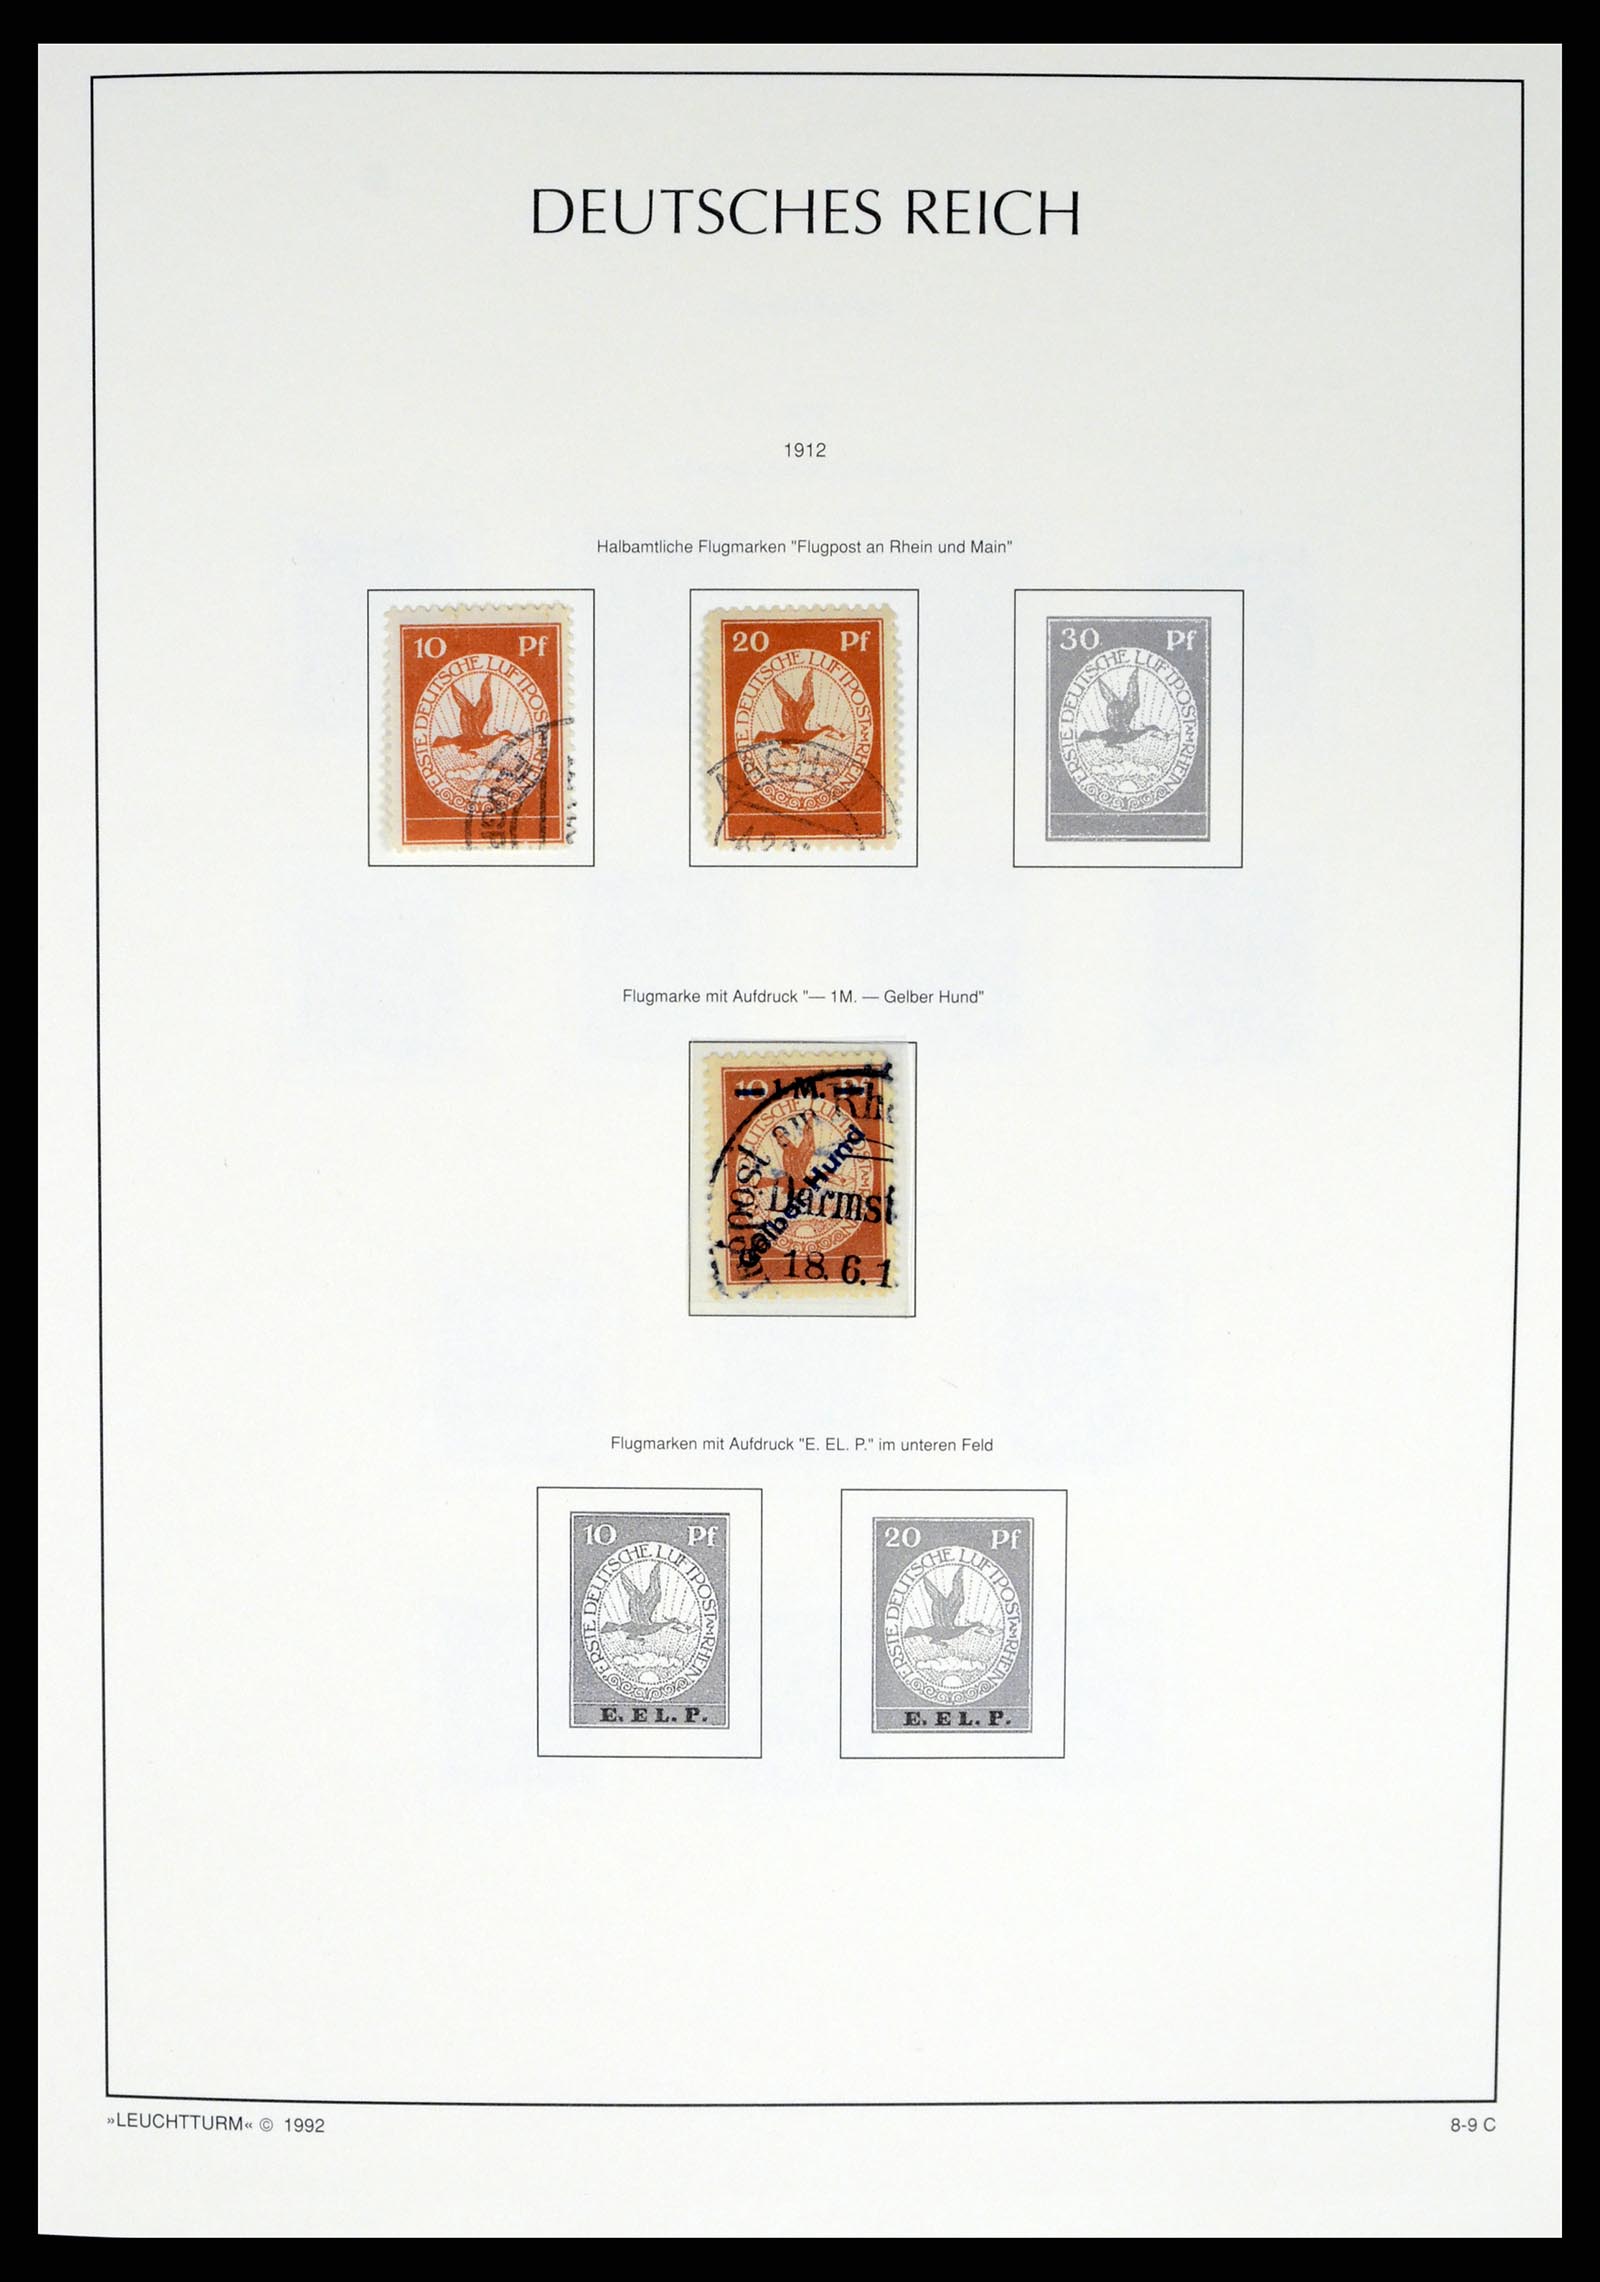 37497 018 - Stamp collection 37497 German Reich 1872-1945.